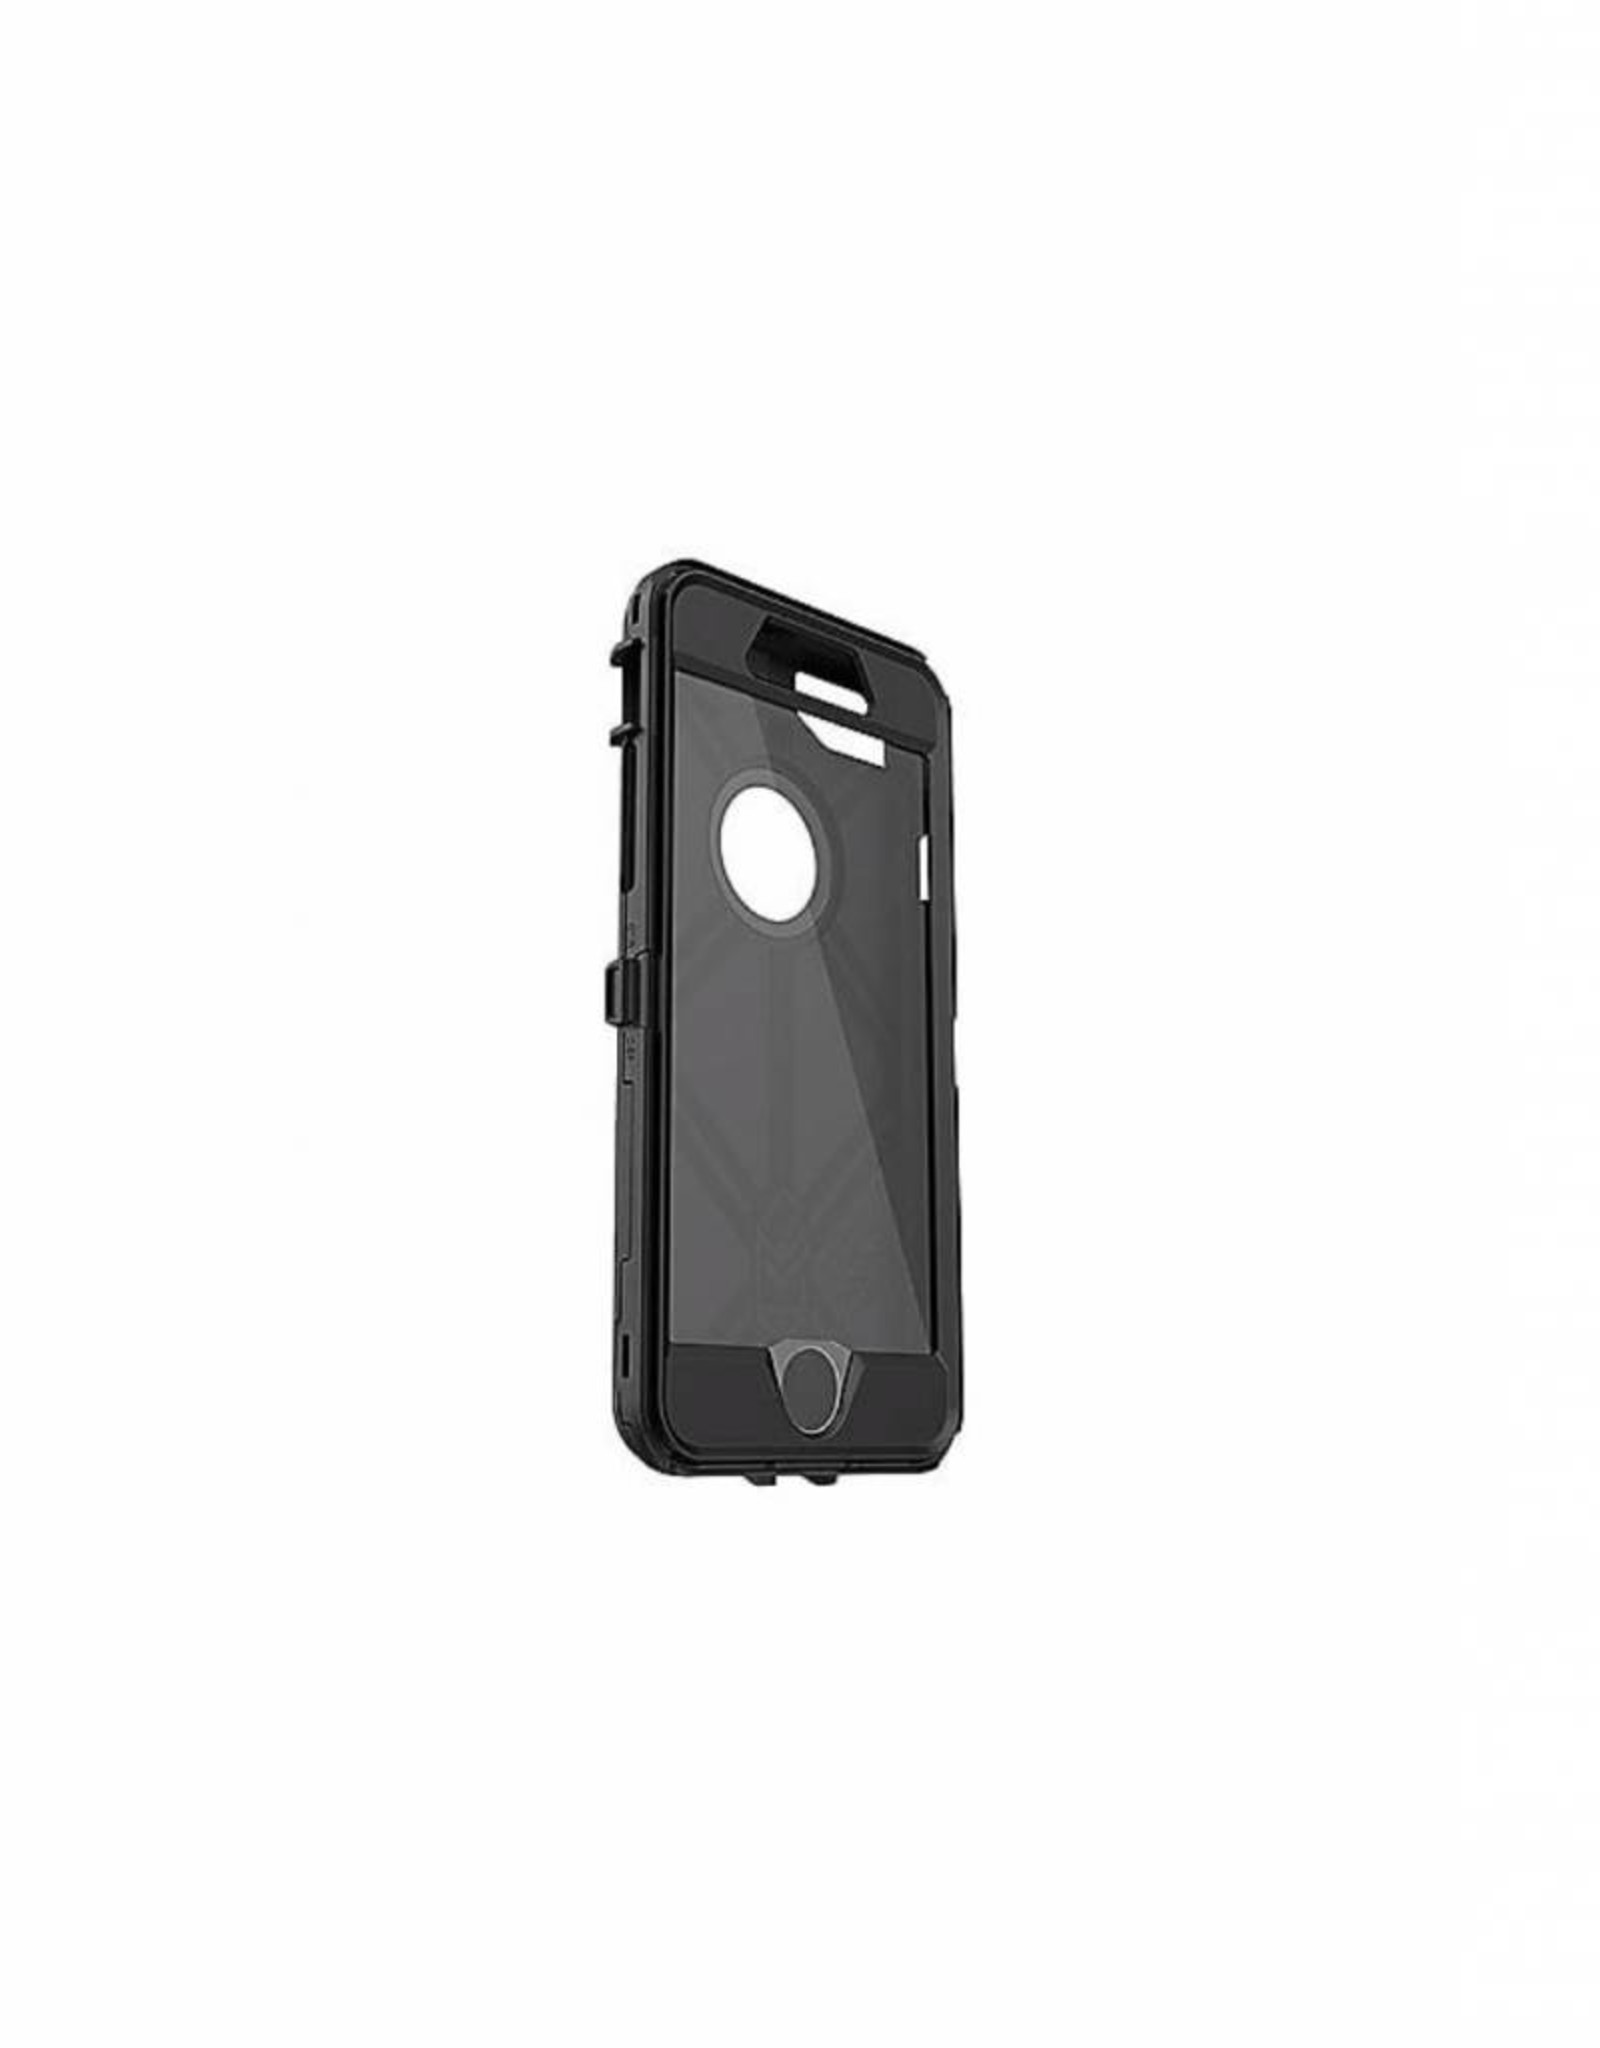 OtterBox Defender Series iPhone 8 Case - Black